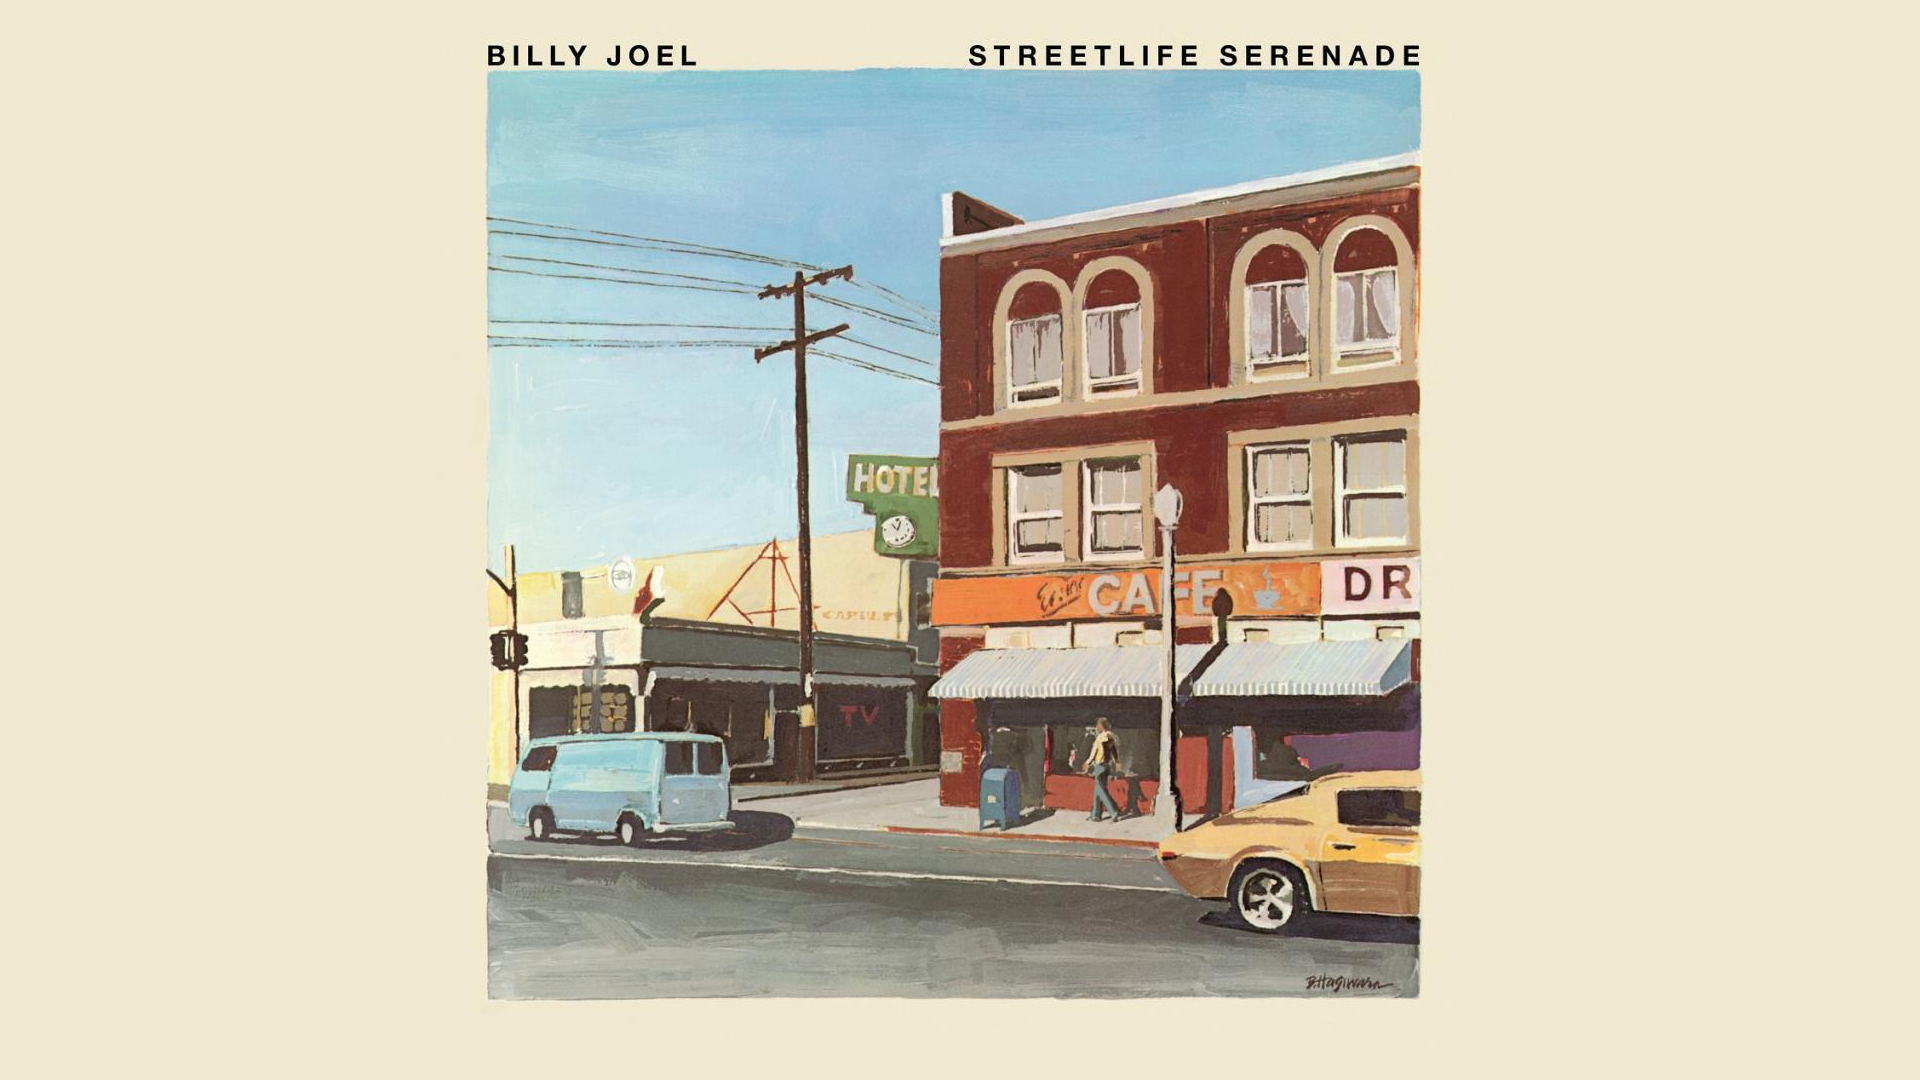 Billy Joel Wallpapers